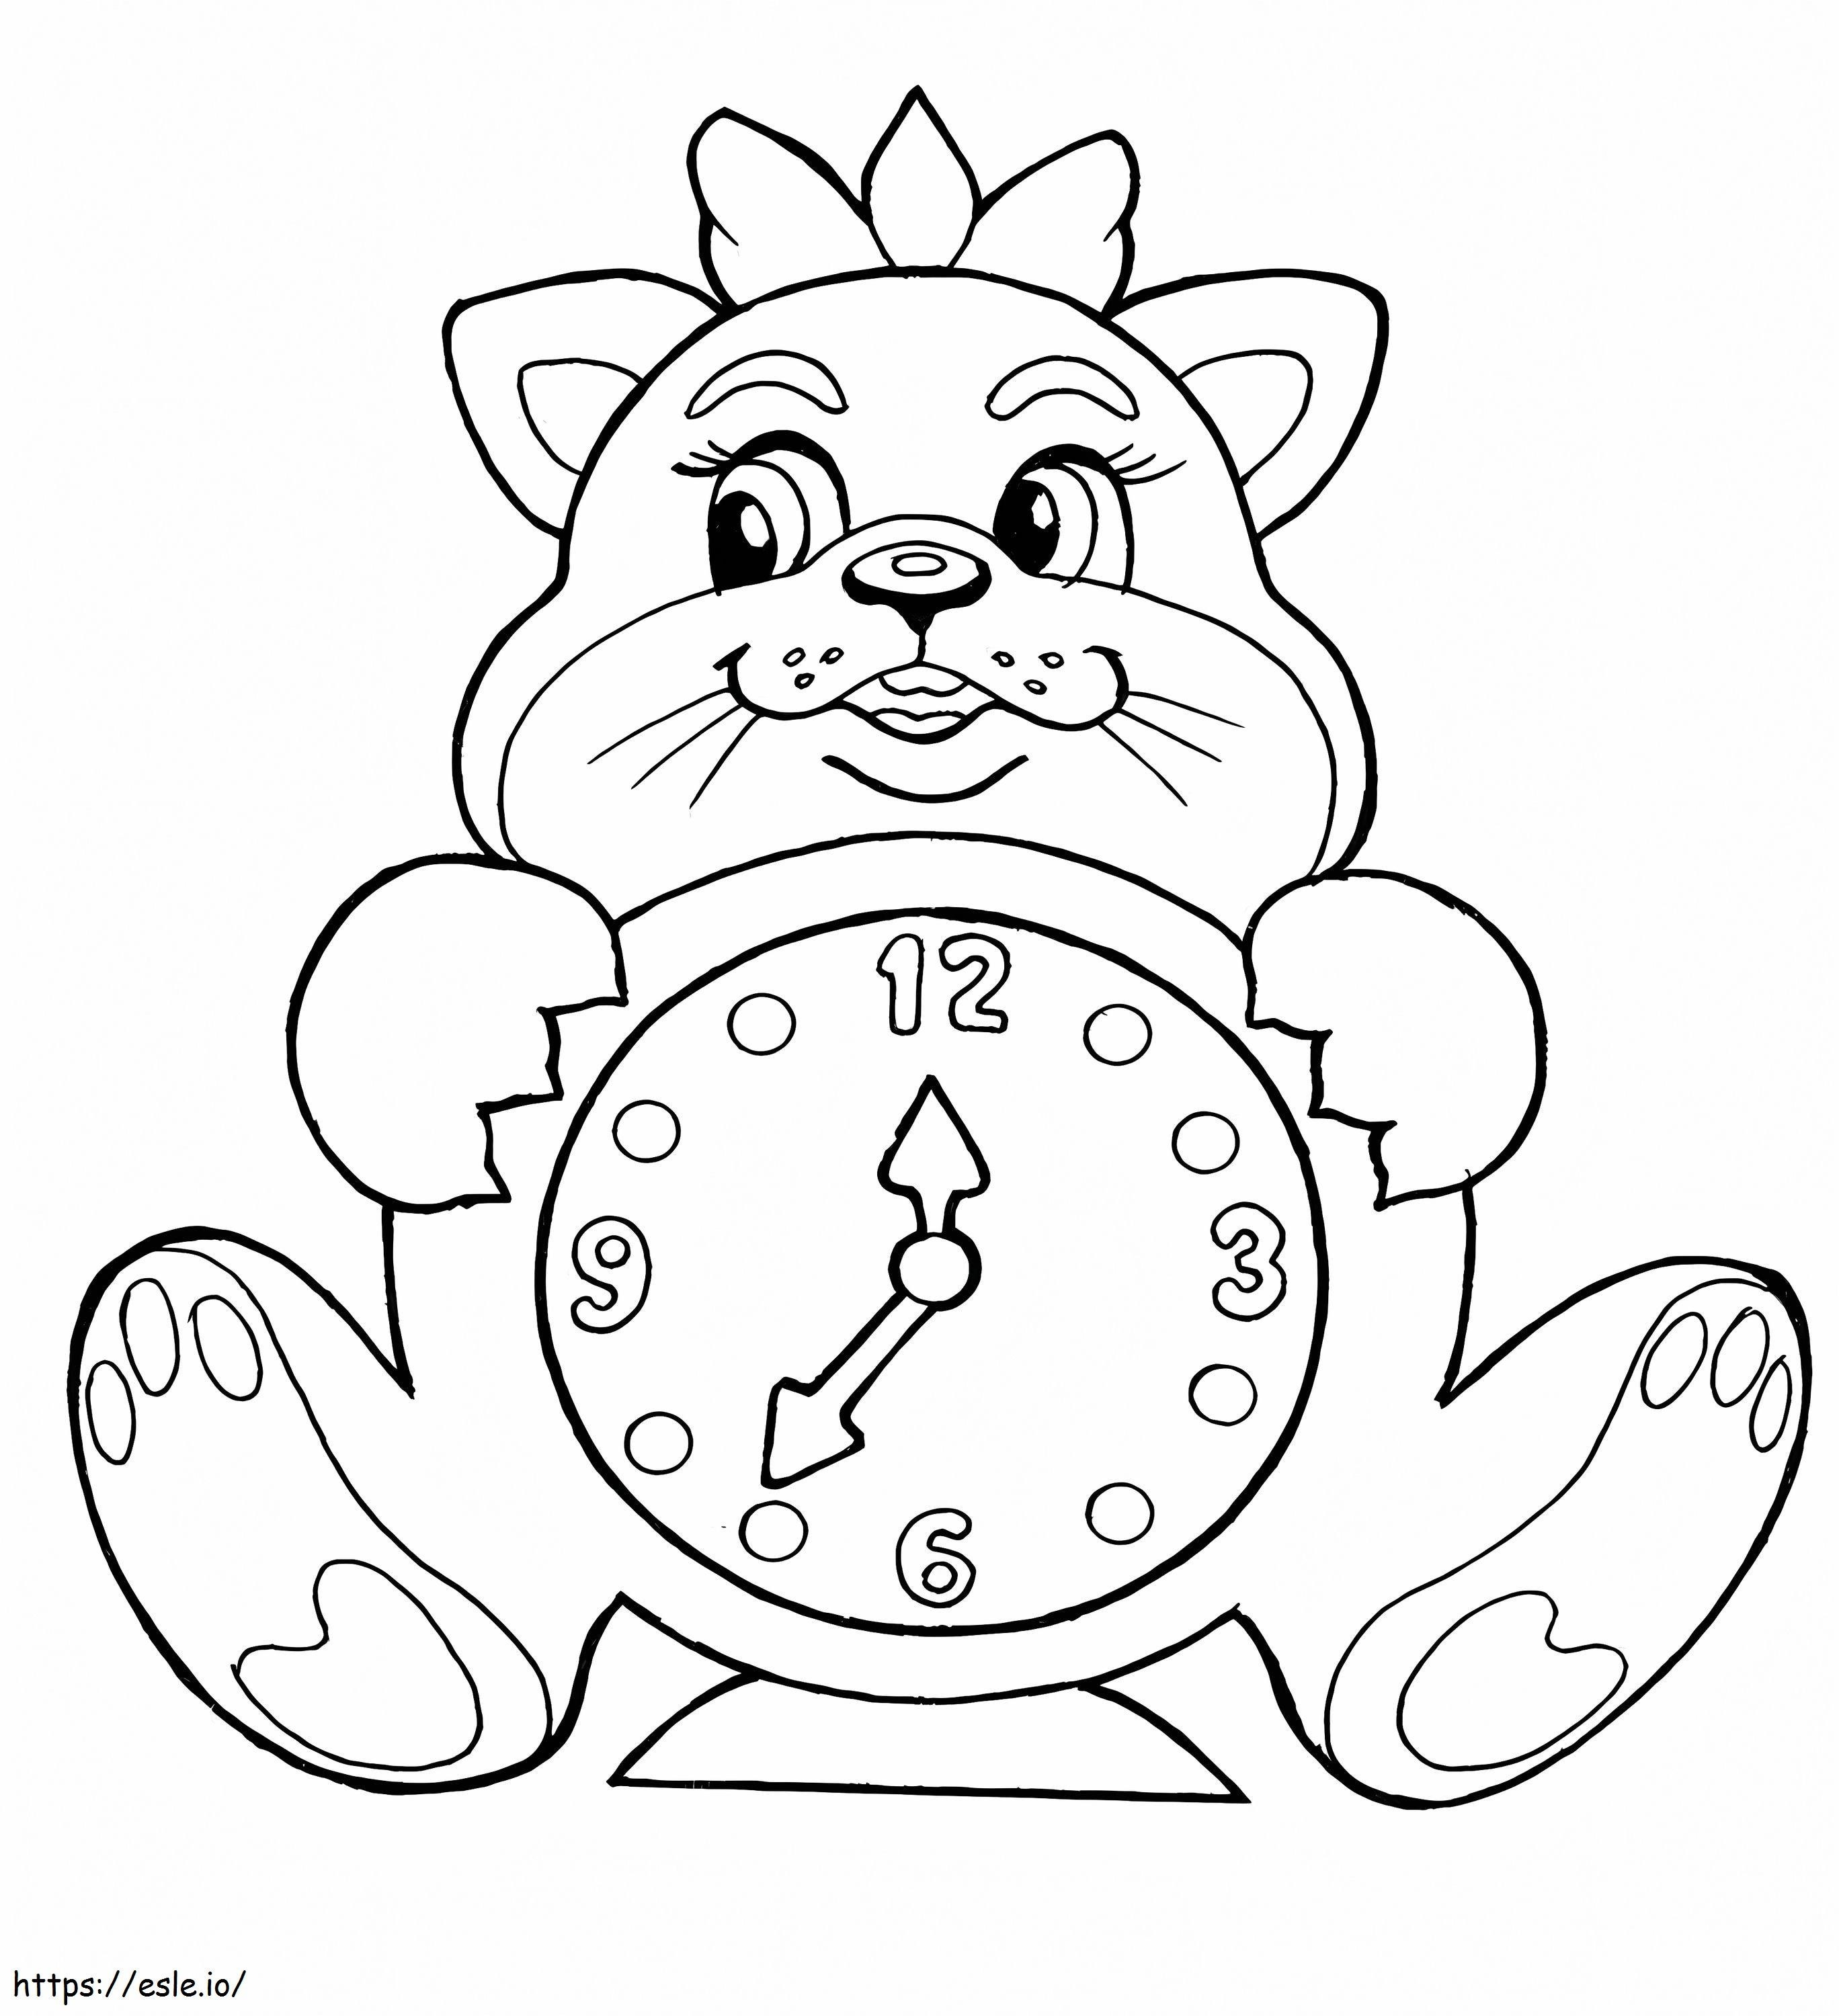 Relógio de gato para colorir